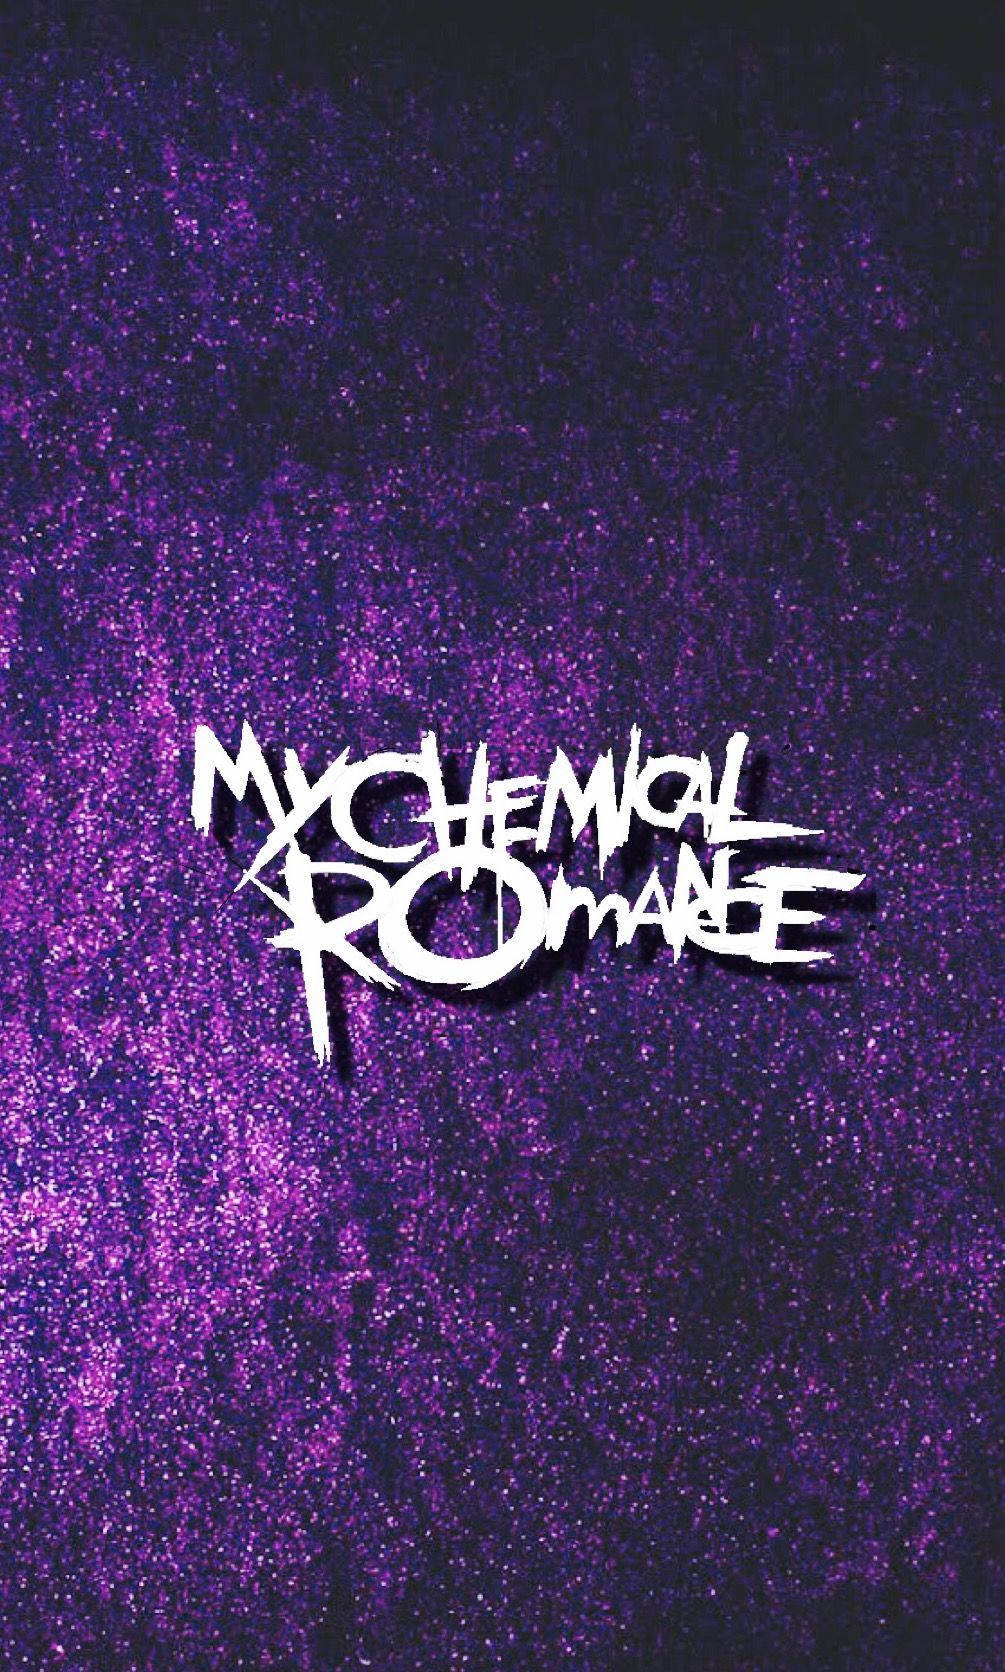 Telefonocon Sfondi Musicali Di My Chemical Romance Sfondo